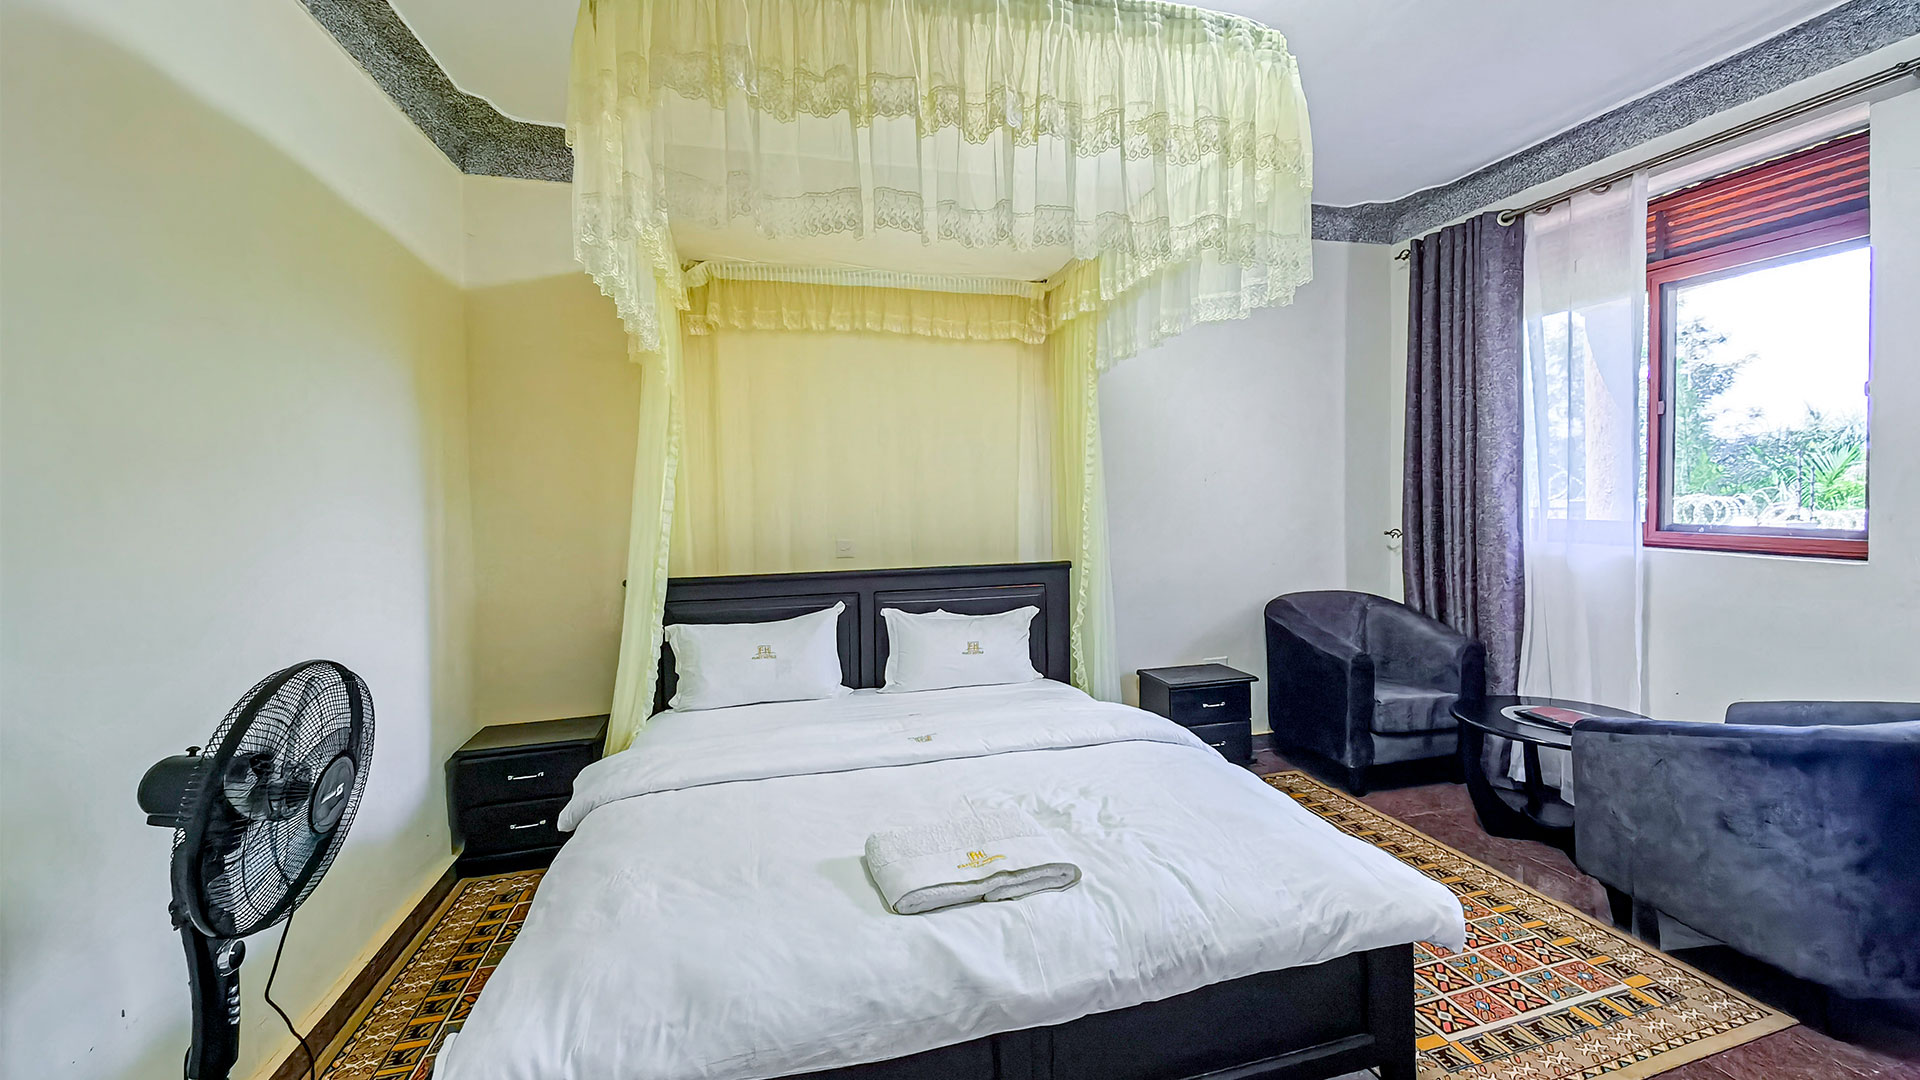 Hotels in Jinja: Lake Victoria Shores at Fancy Resort Beach Hotel